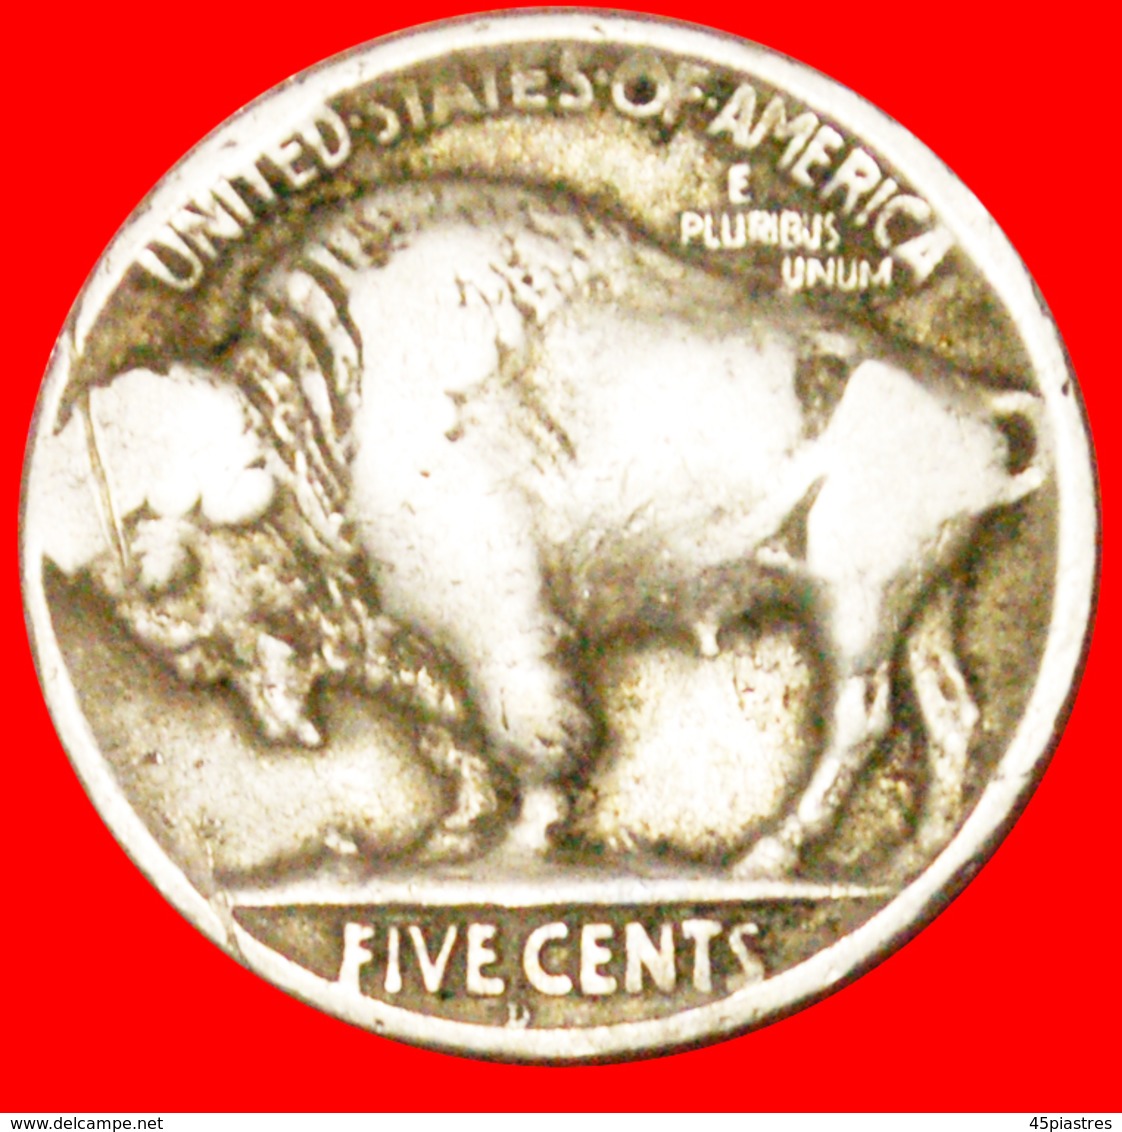 # INDIAN HEAD (1913-1938): USA ★ 5 CENTS 1920 BLACK DIAMOND (1893-1915) KEY DATE! LOW START ★ NO RESERVE! - 1913-1938: Buffalo